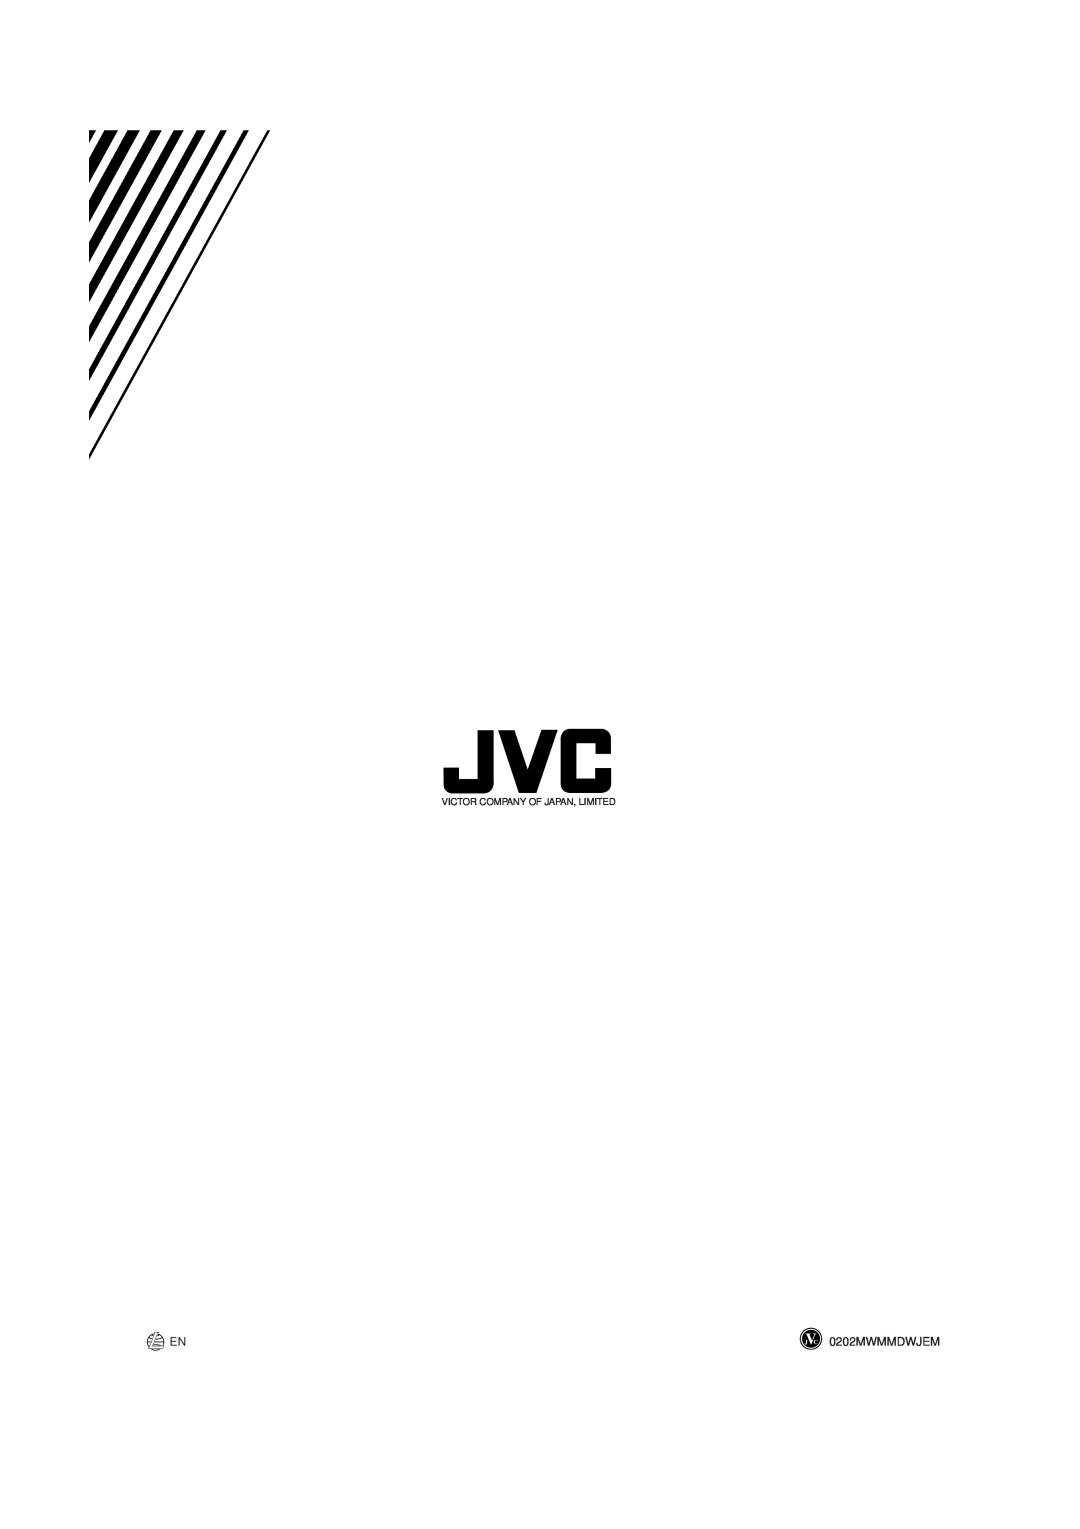 JVC HX-Z1 manual 0202MWMMDWJEM, Victor Company Of Japan, Limited 